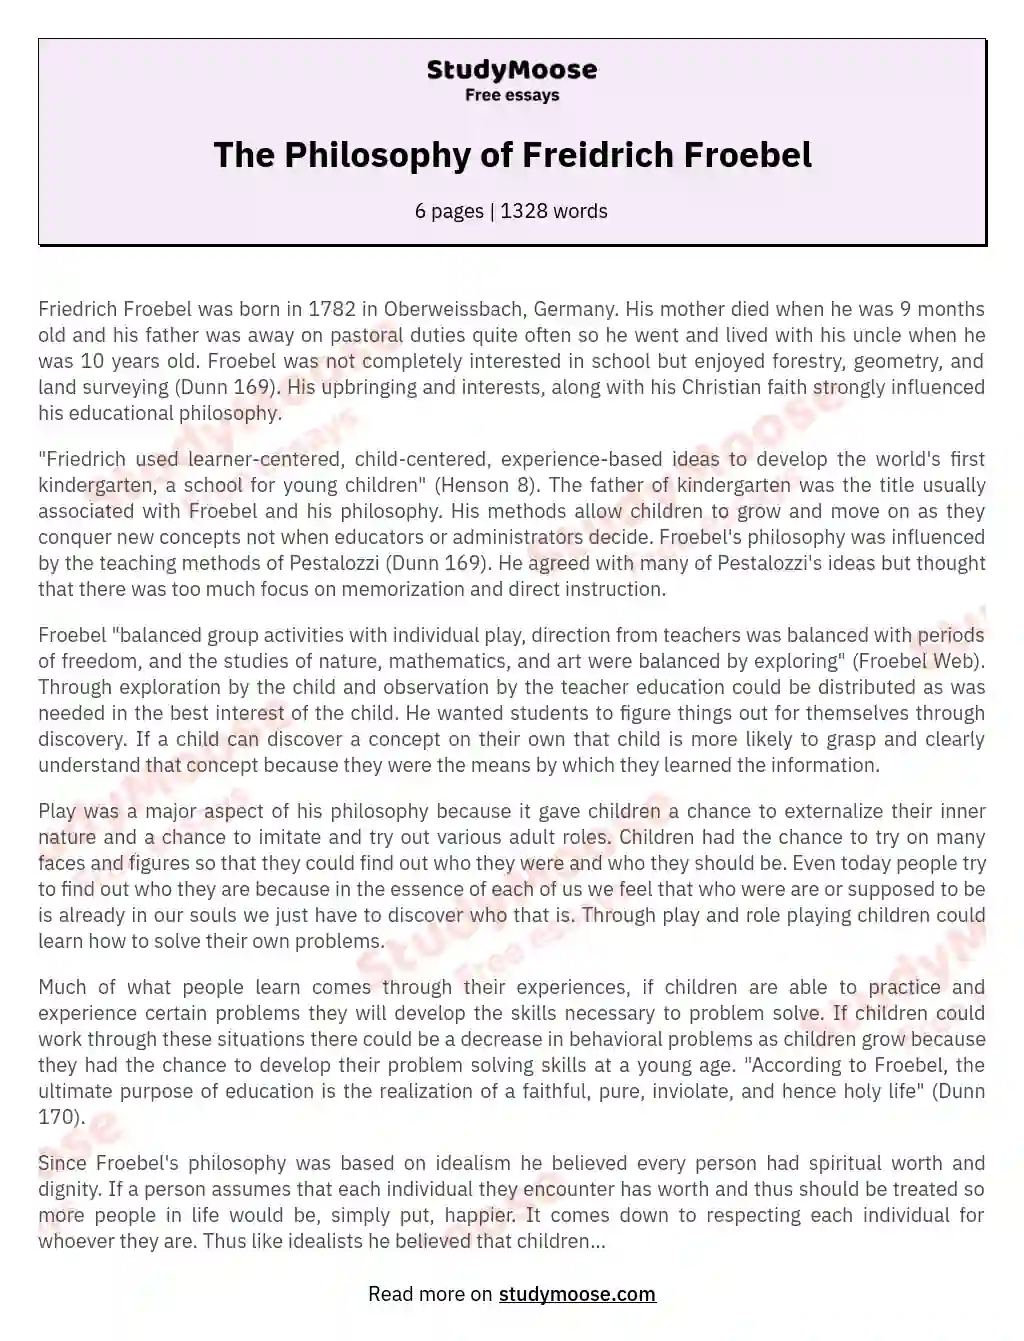 The Philosophy of Freidrich Froebel essay